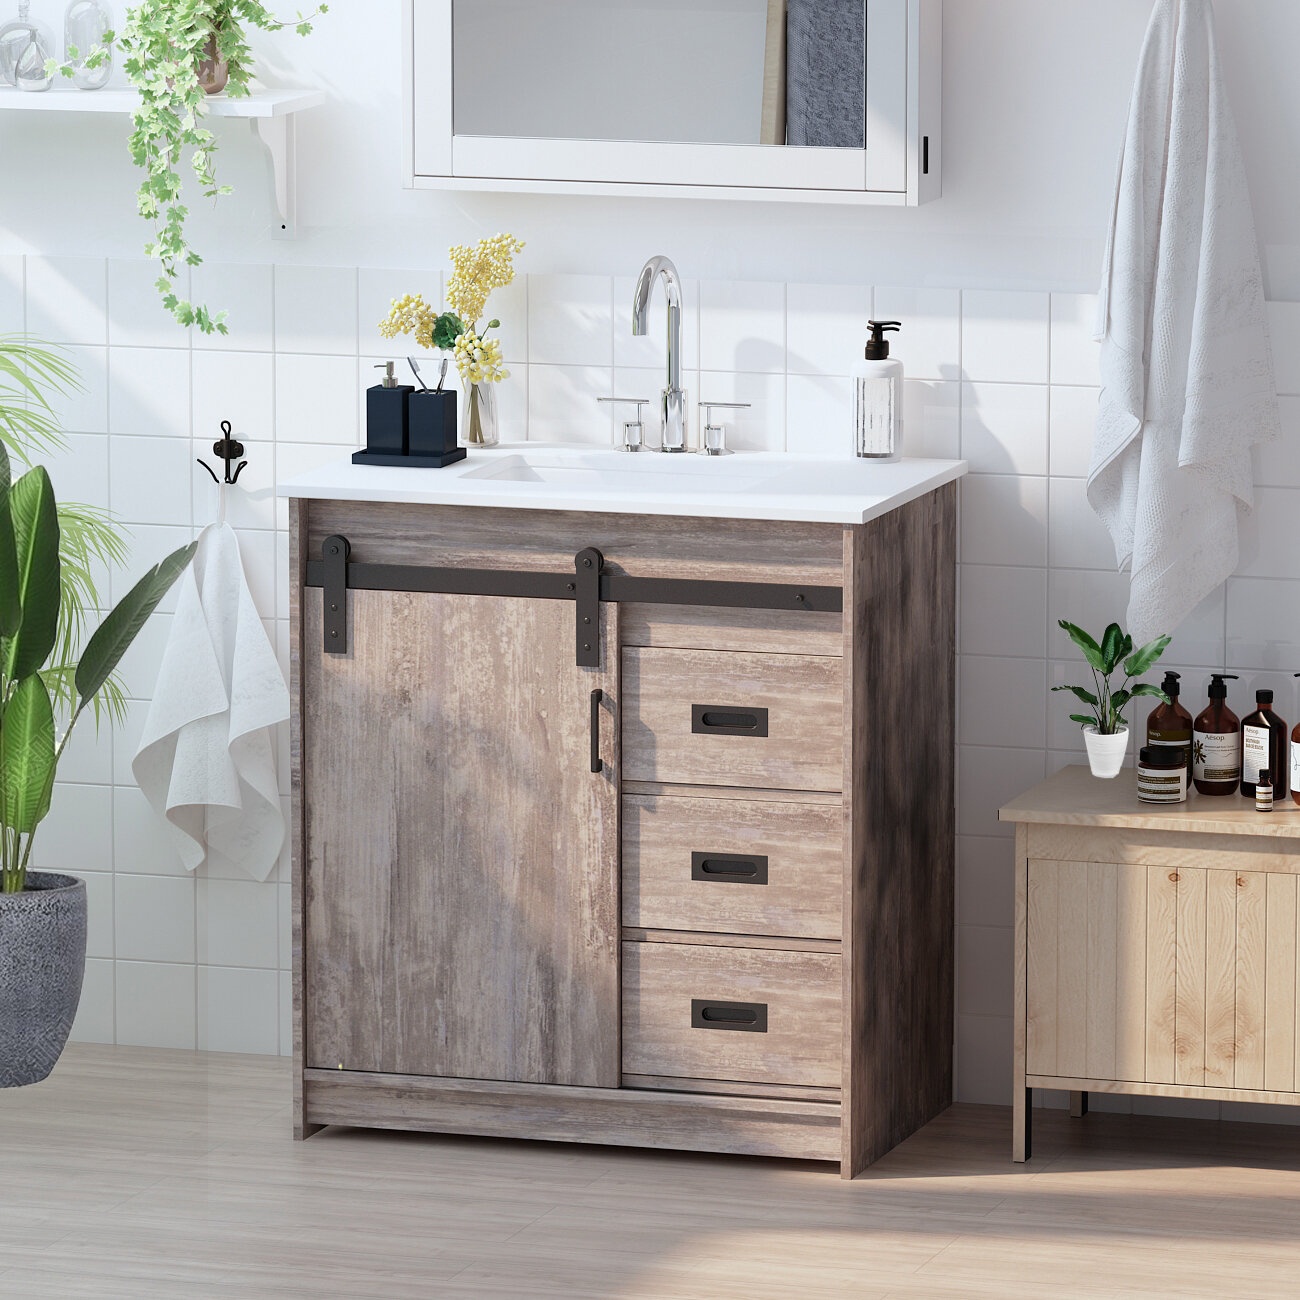 https://visualhunt.com/photos/23/29-9-w-x-18-8-d-x-33-3-h-single-sinks-accommodatedbathroom-vanity.jpg